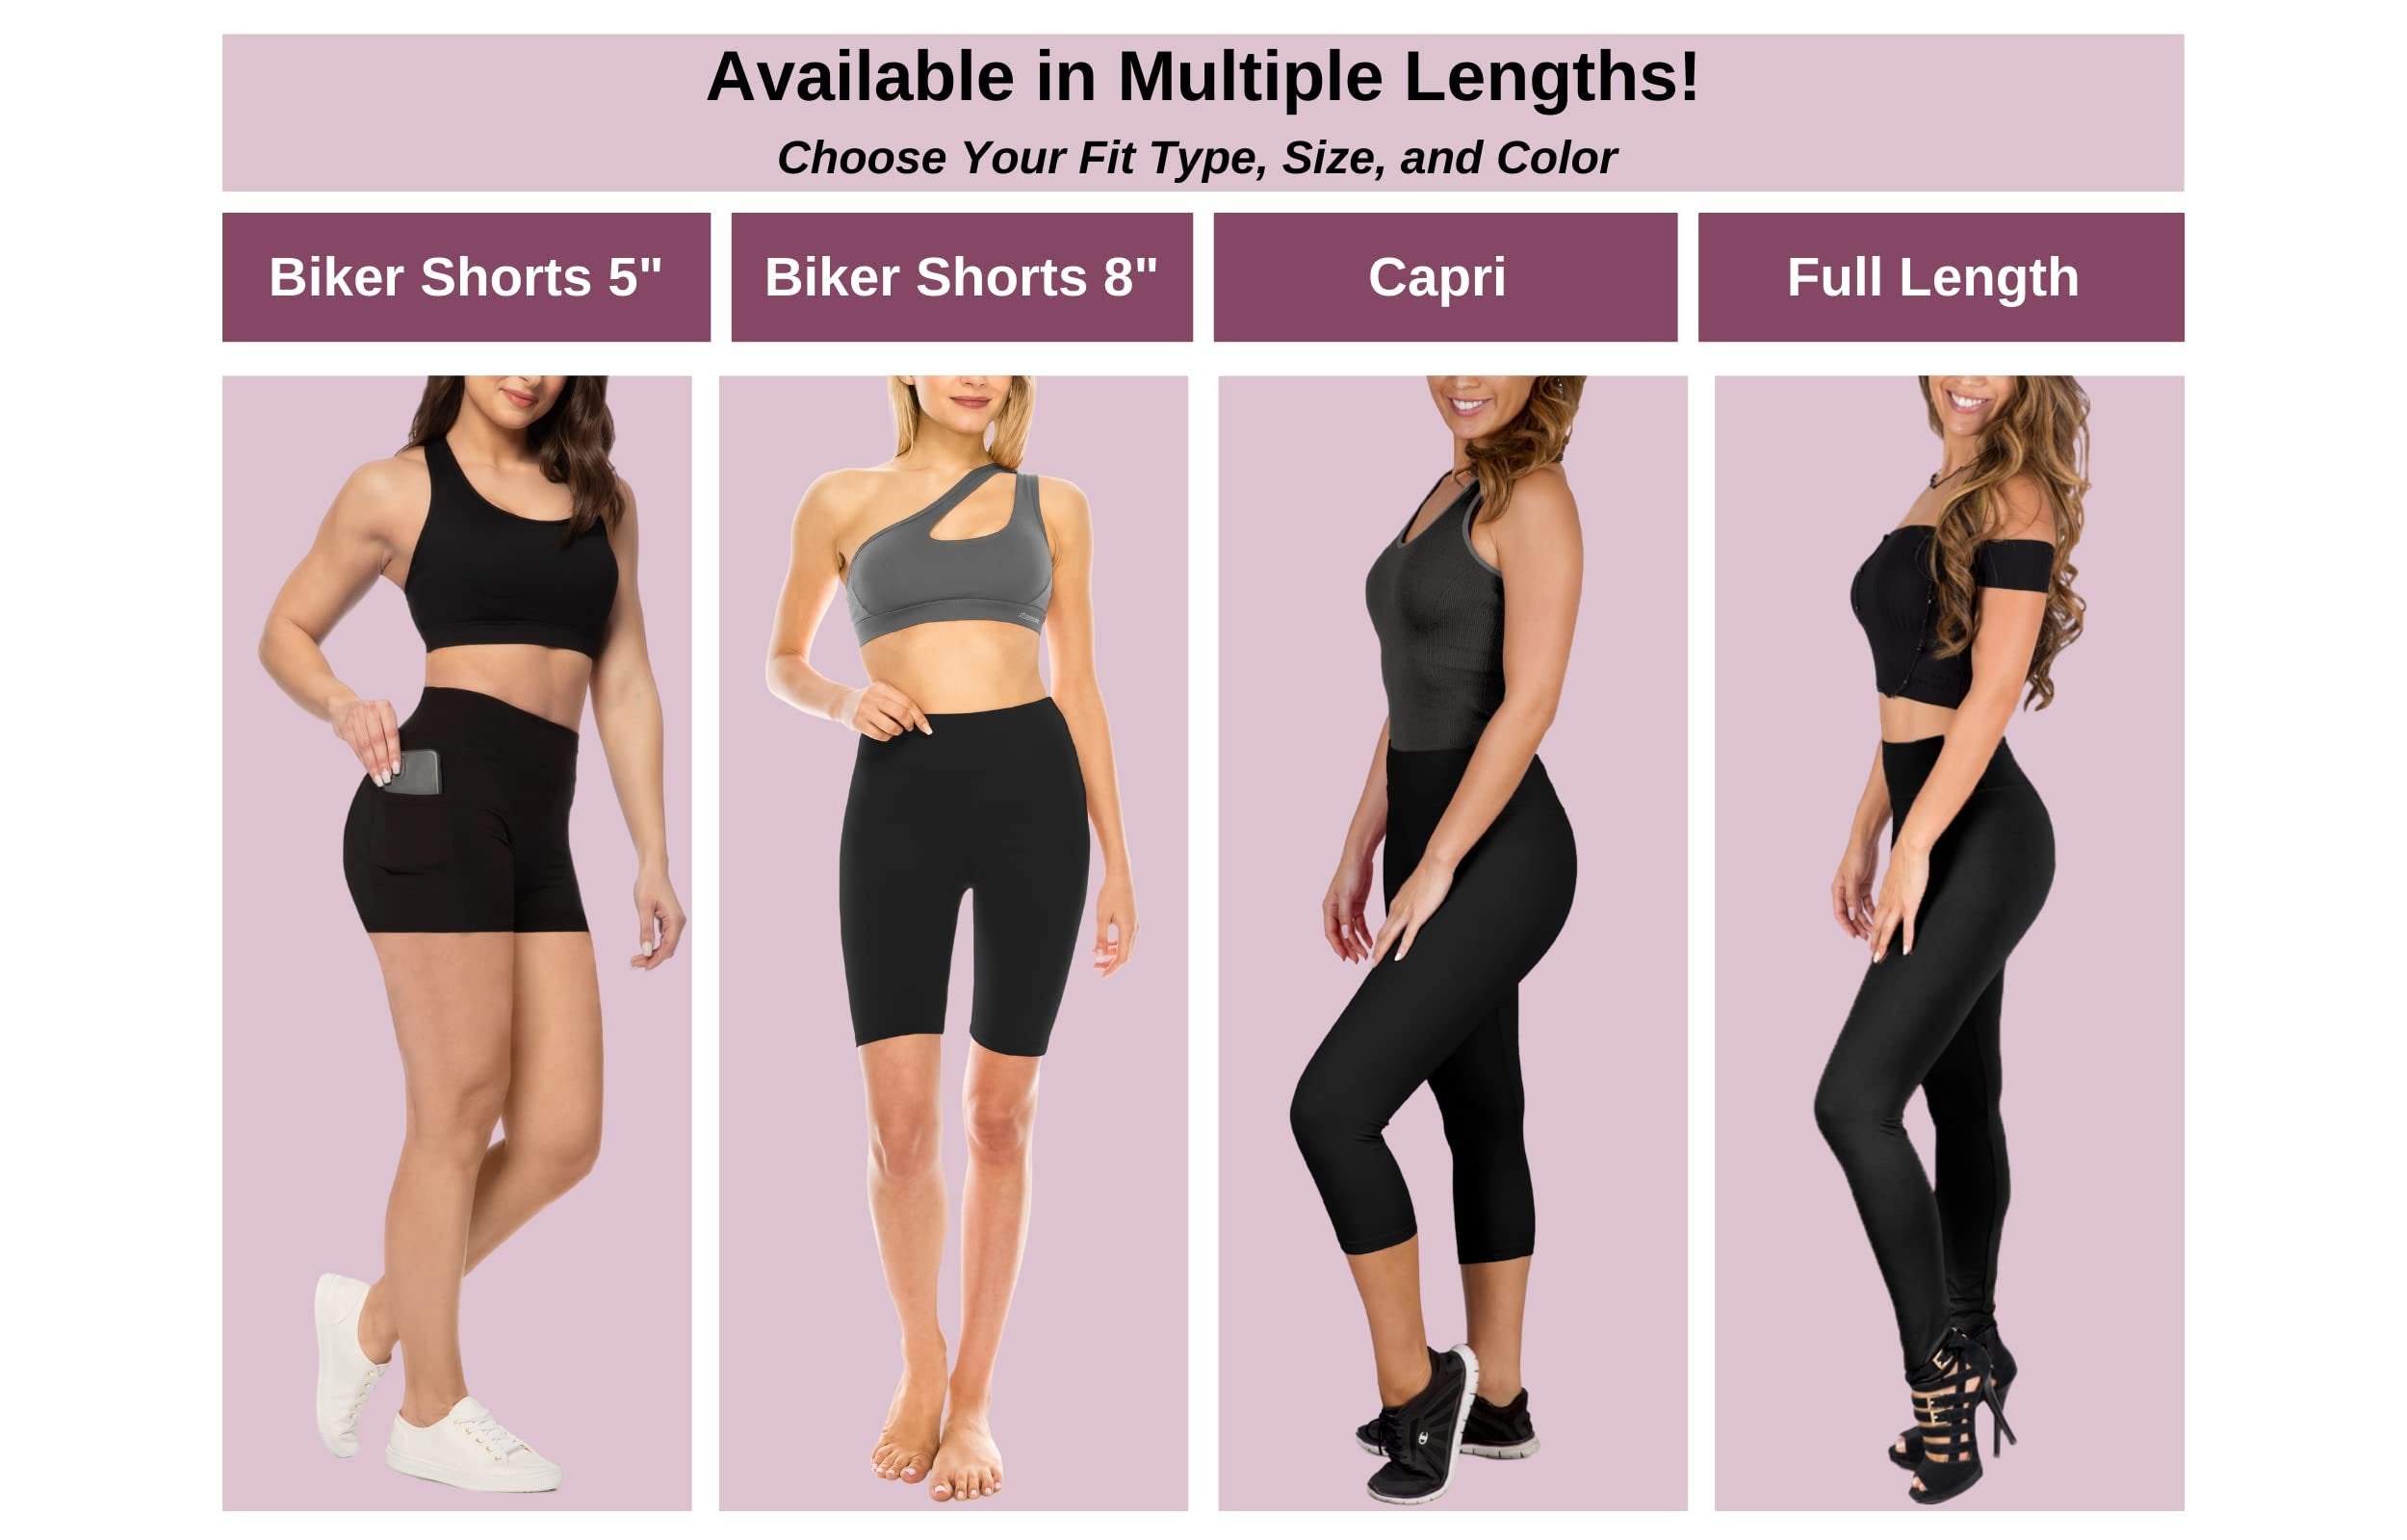 SATINA Charcoal Capri Leggings - High Waist Tummy Control - 3 Waistband - One Size